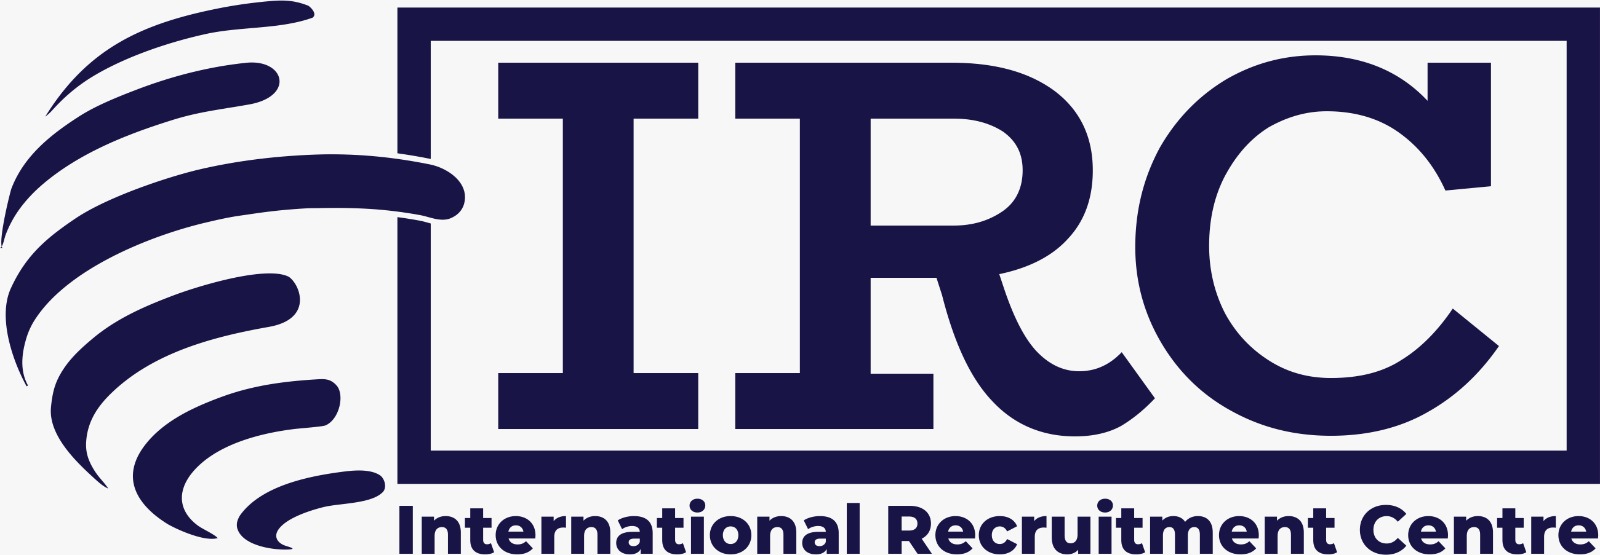 International Recruitment Centre Pte. Ltd. logo